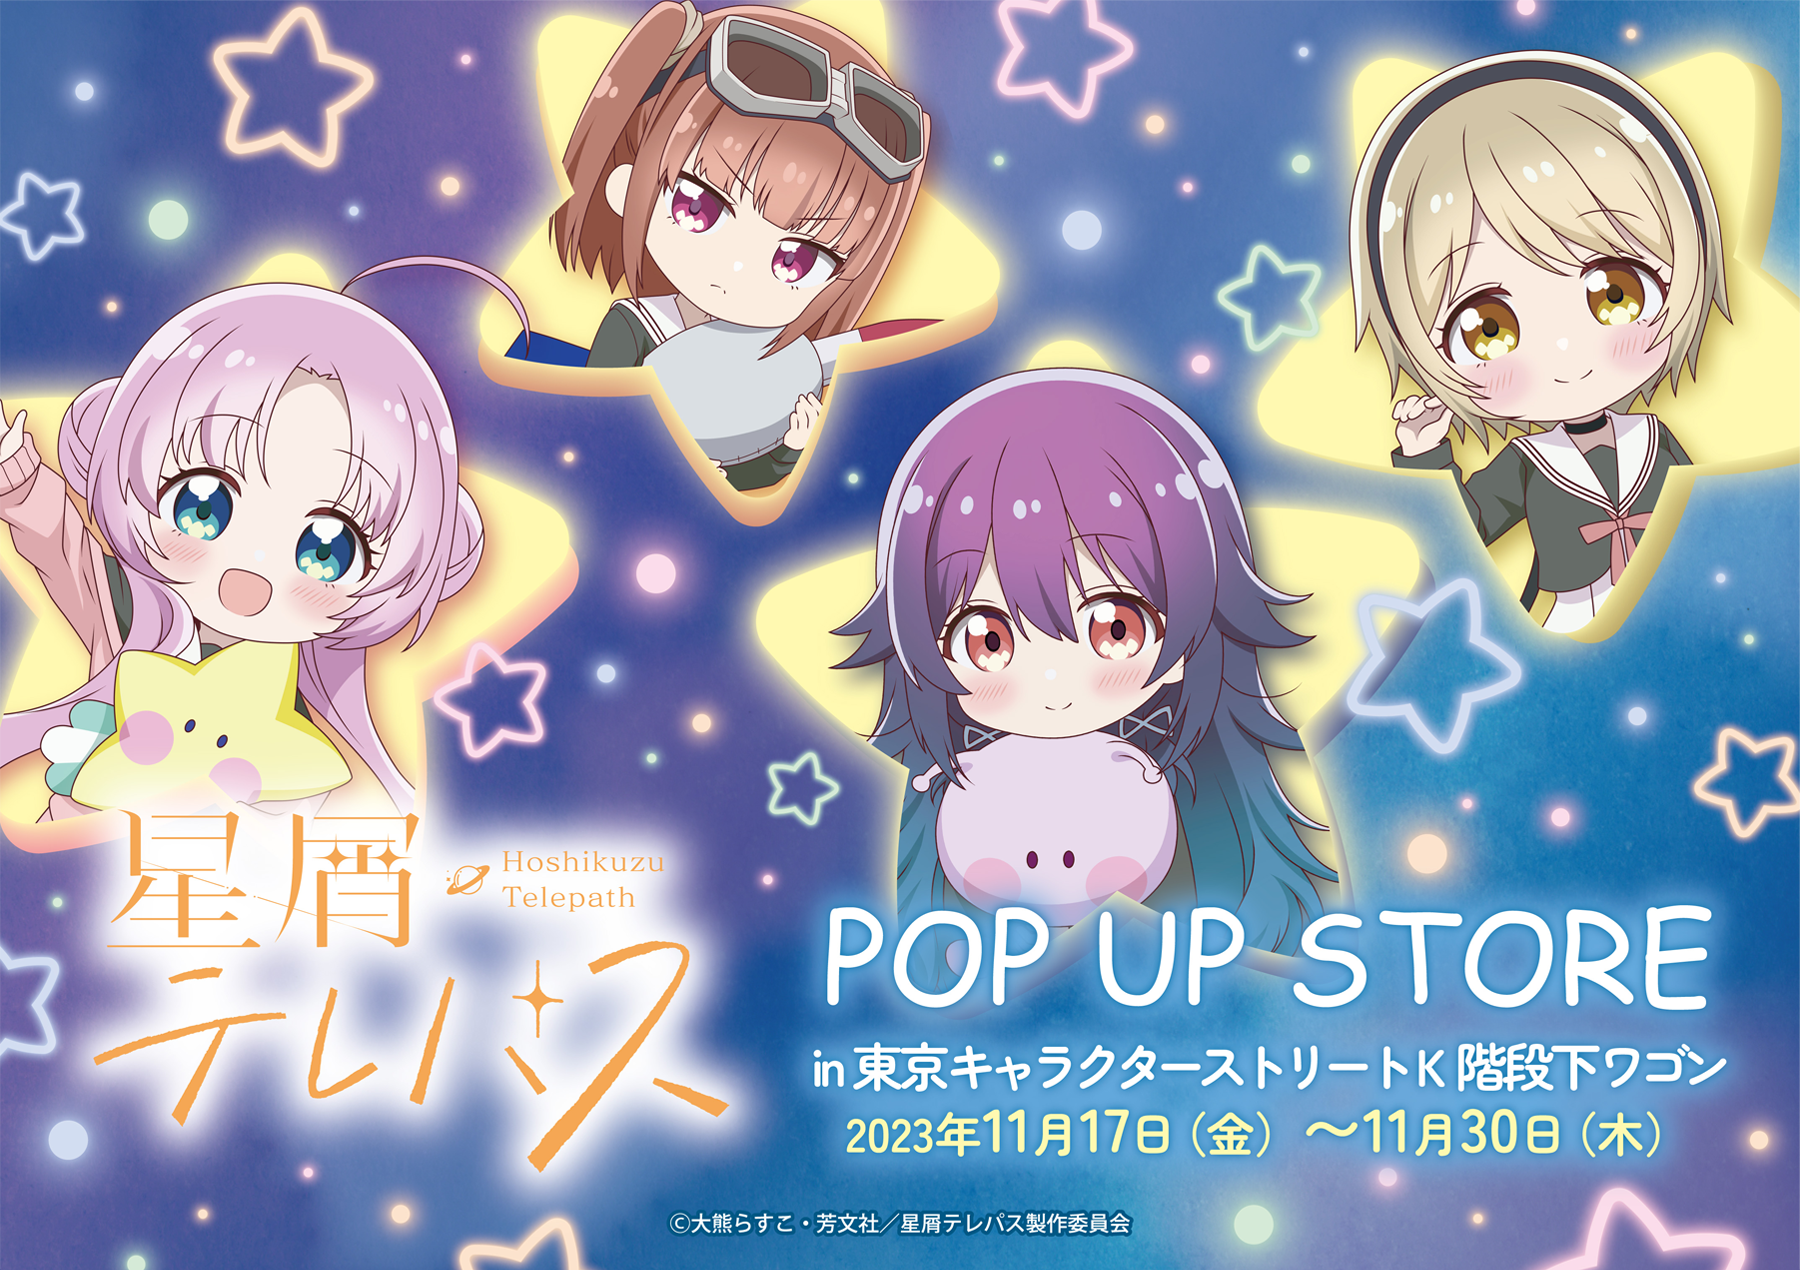 Hoshikuzu Telepath Pop-up store is open at Tokyo Character Street Wagon!